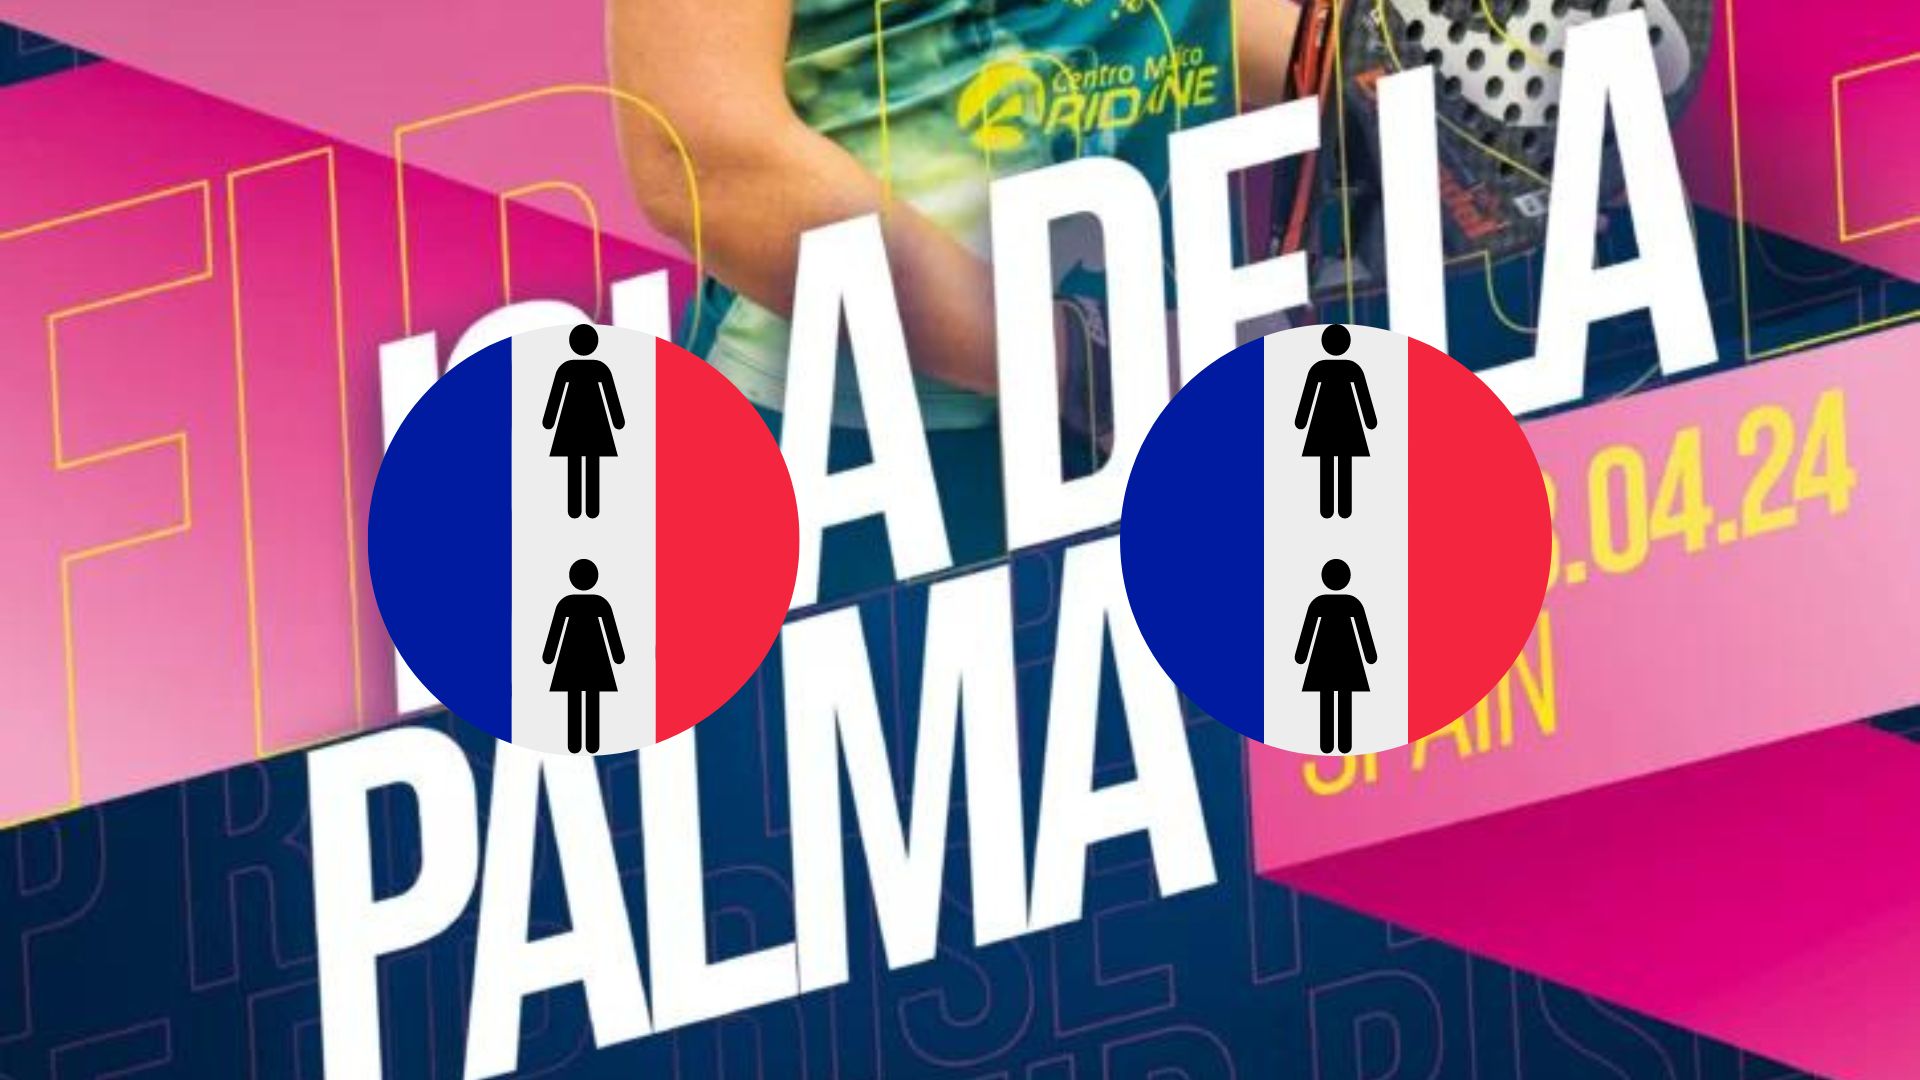 FIP Isla de la Palma – Het Franse programma